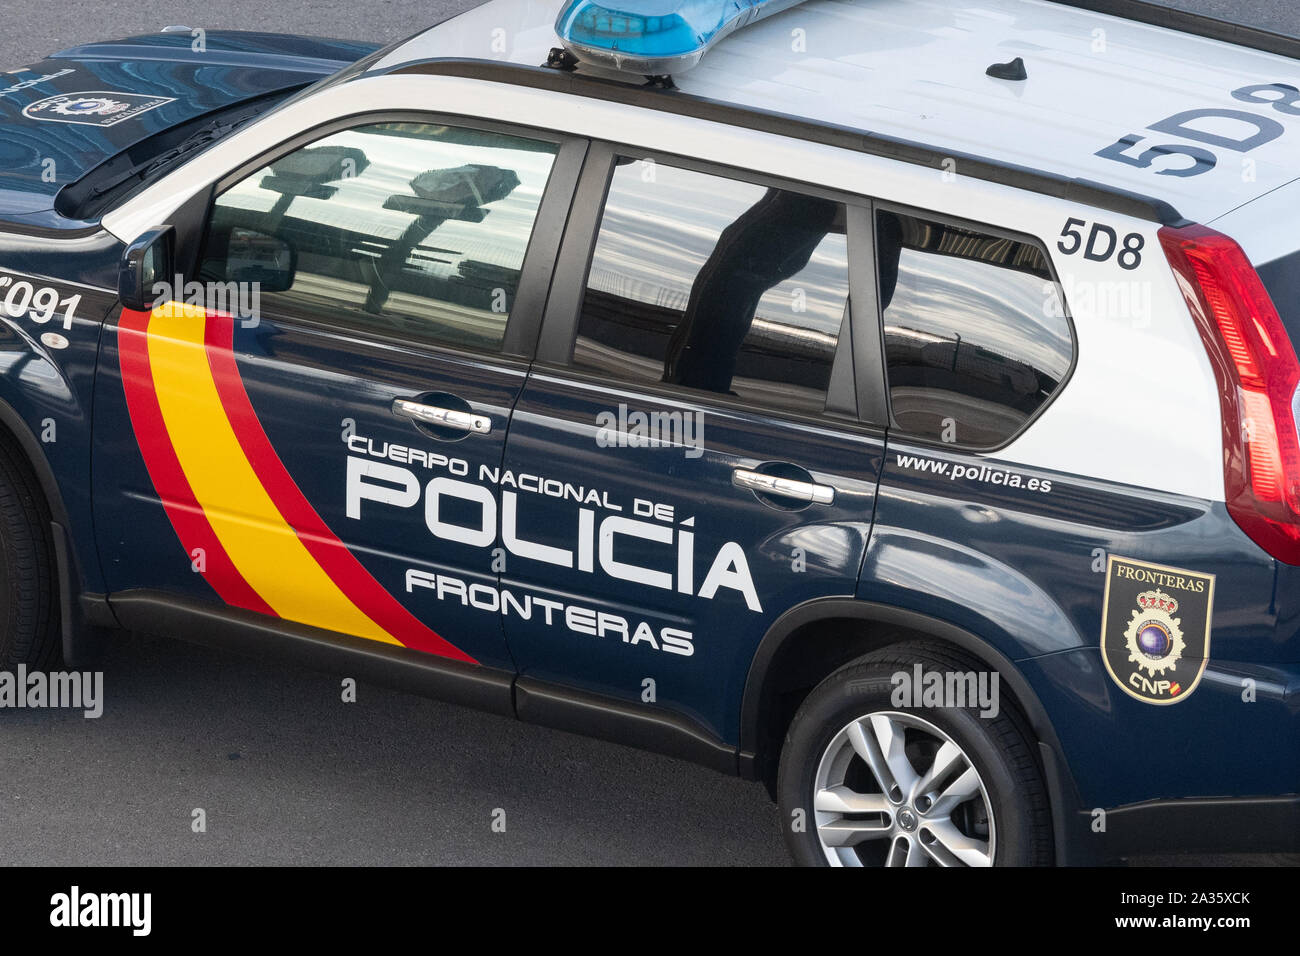 Spanish border police patrol car - Cuerpo Nacional de Policia Frontera - Bilbao Ferry Port Stock Photo